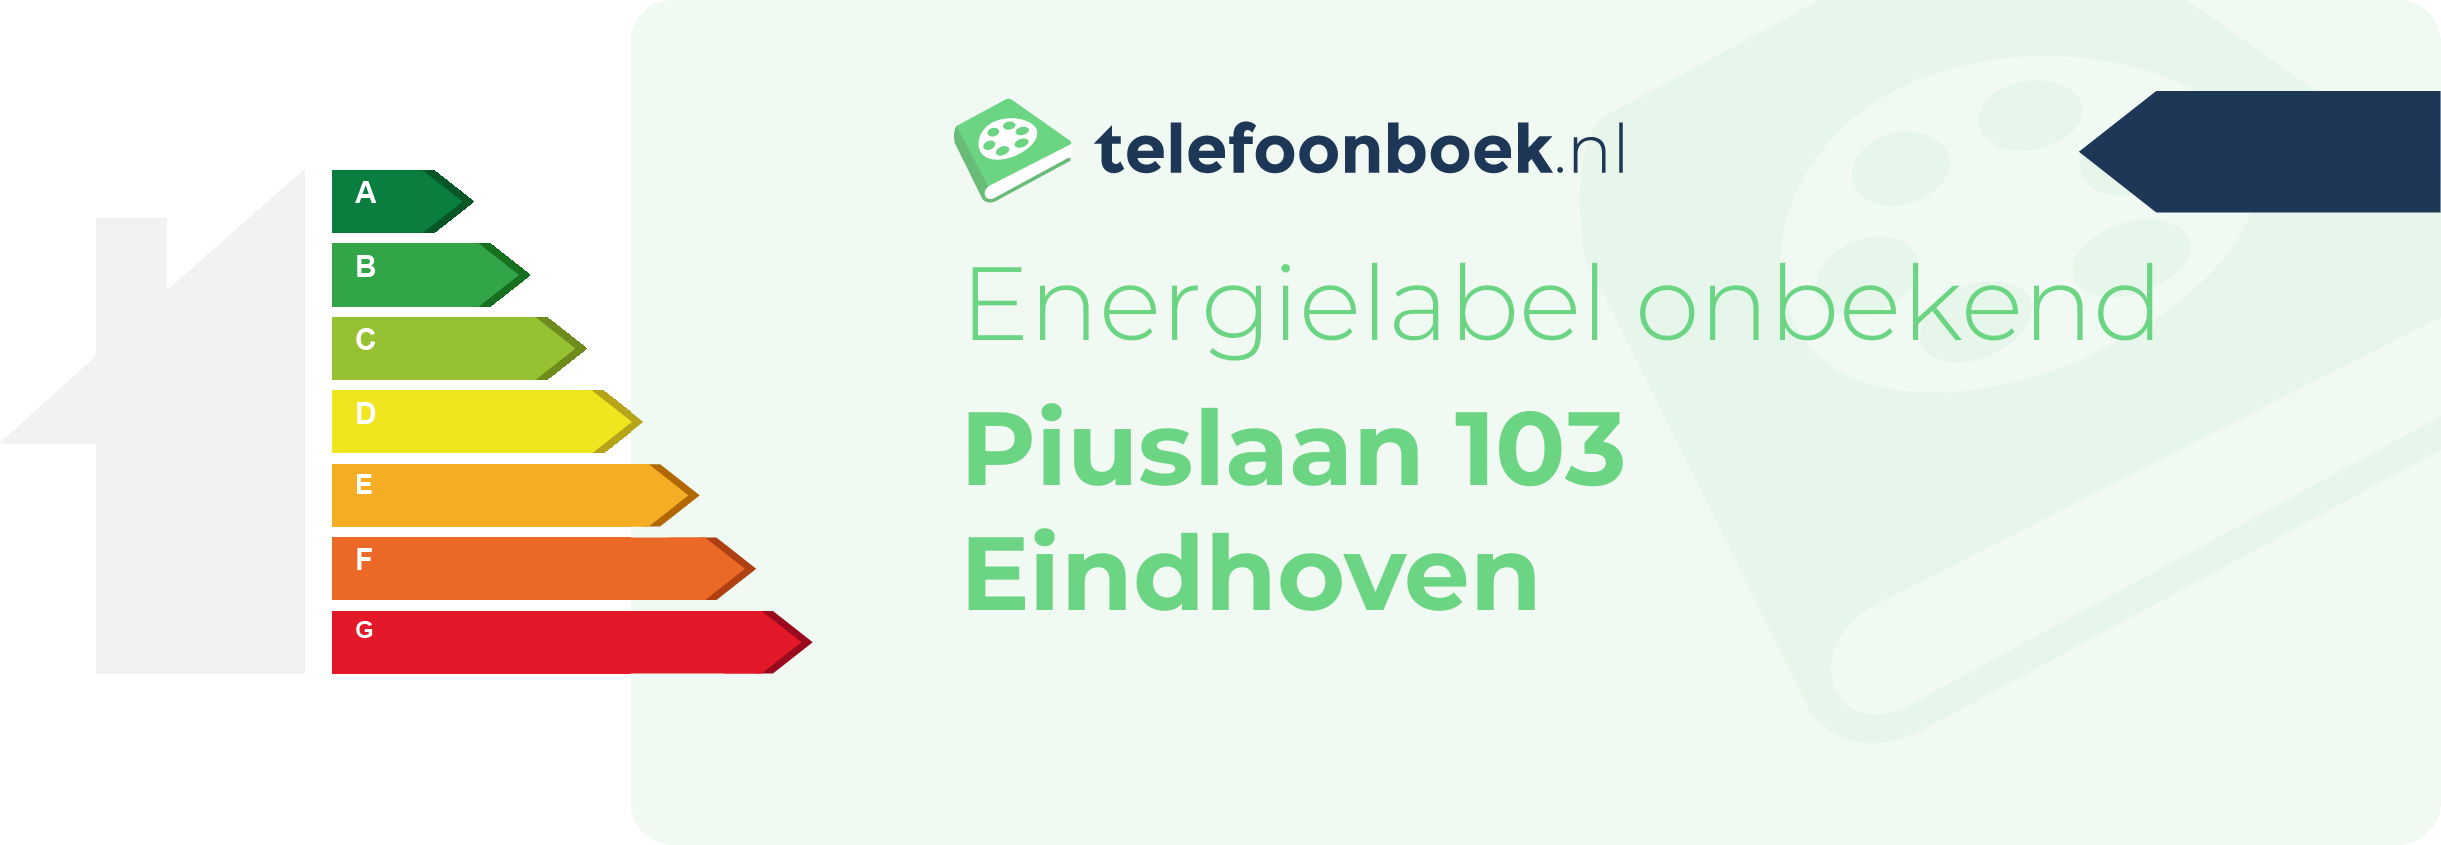 Energielabel Piuslaan 103 Eindhoven